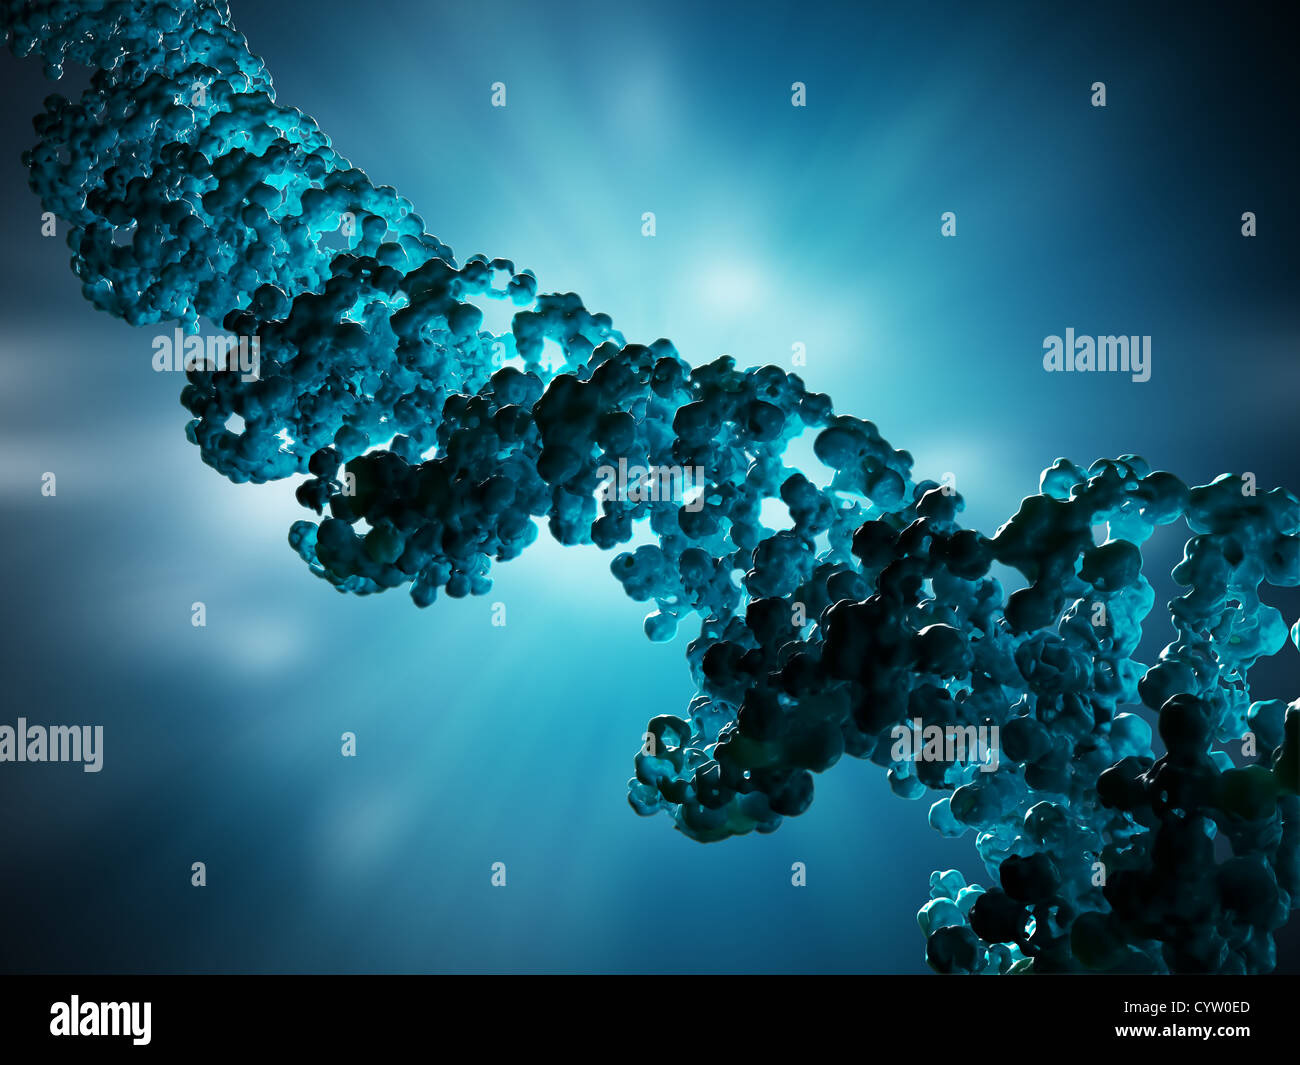 DNA-Strang - Genforschung Abbildung Stockfoto